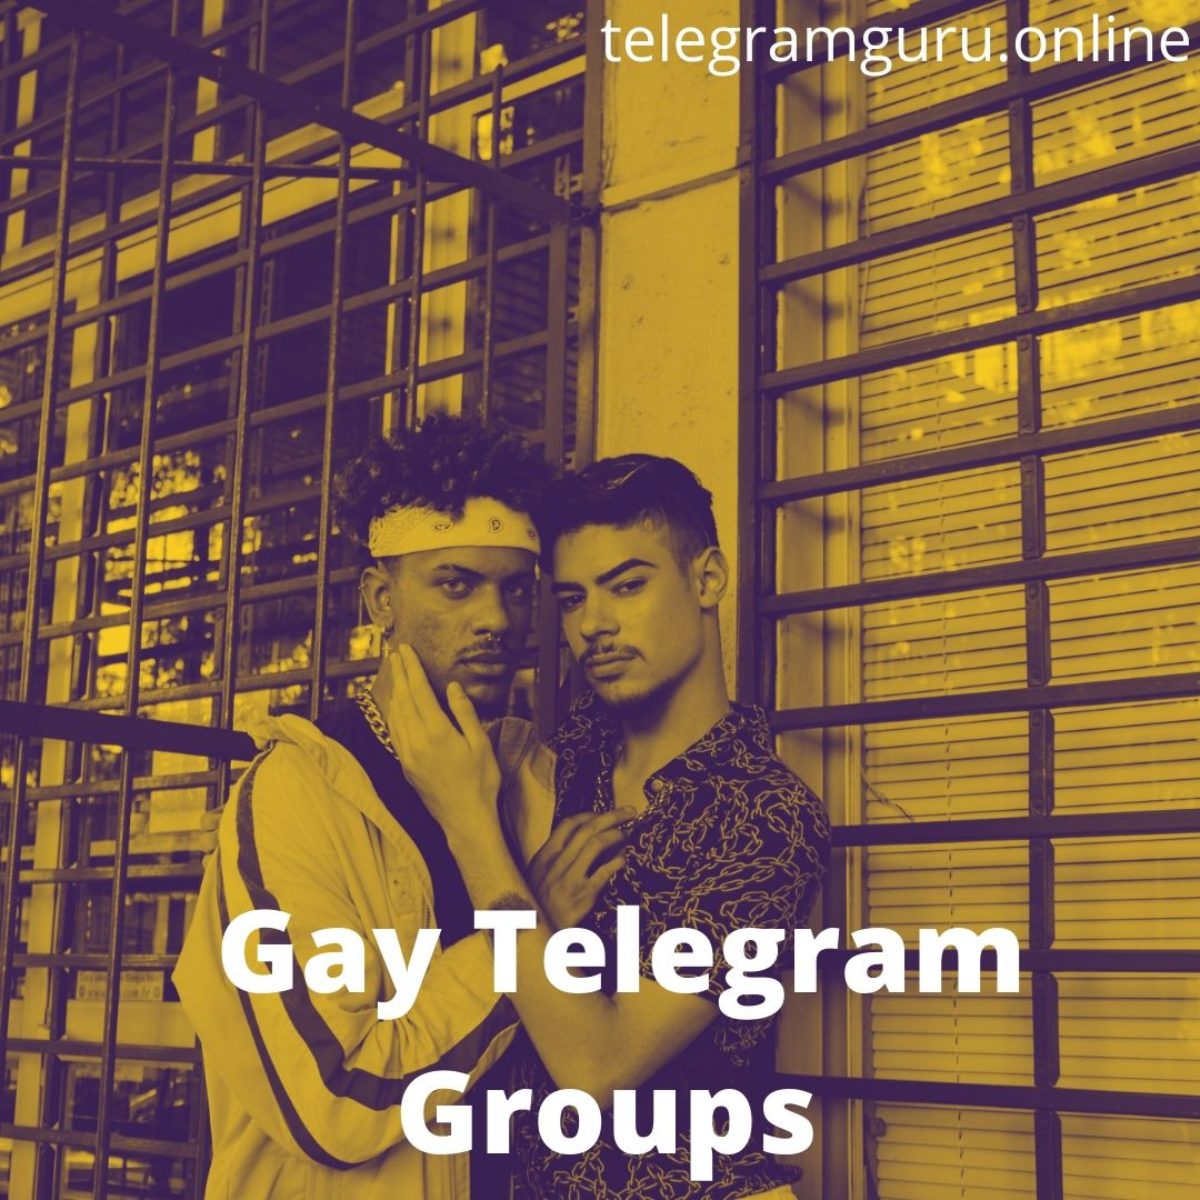 Gay telegram group